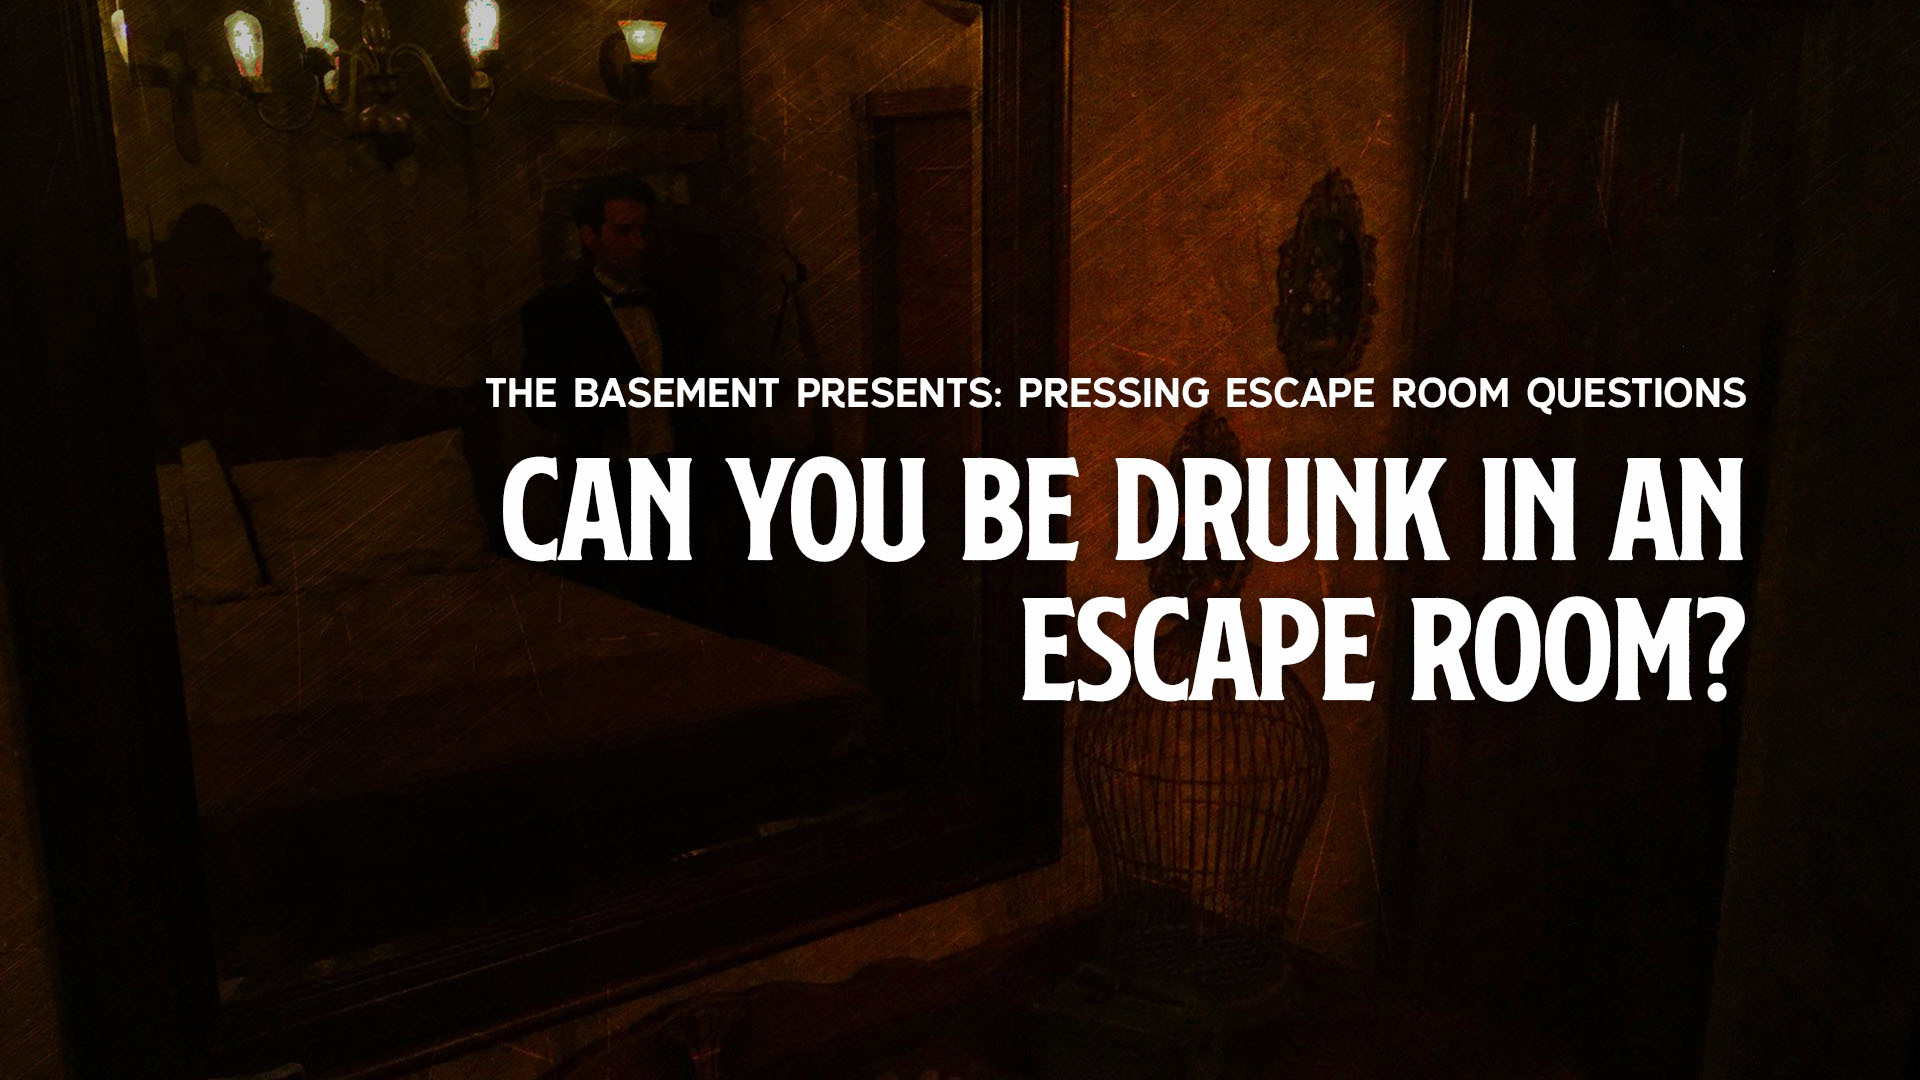 Drunk, Sober, High: Escape Room